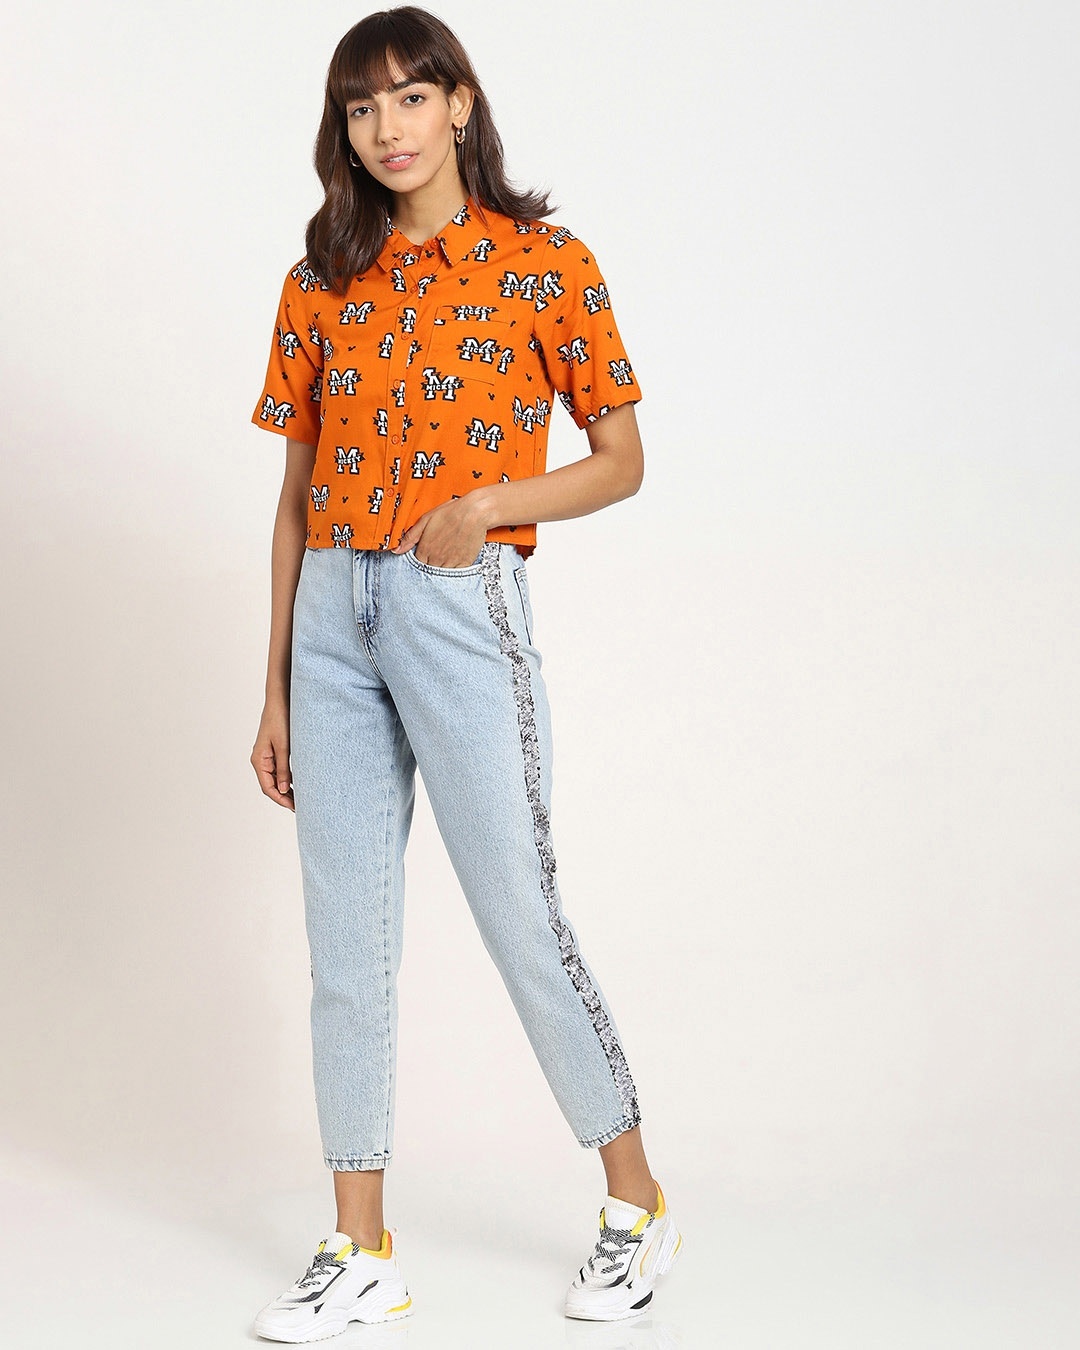 Shop Women's All Over Printed Boxy Orange Shirt